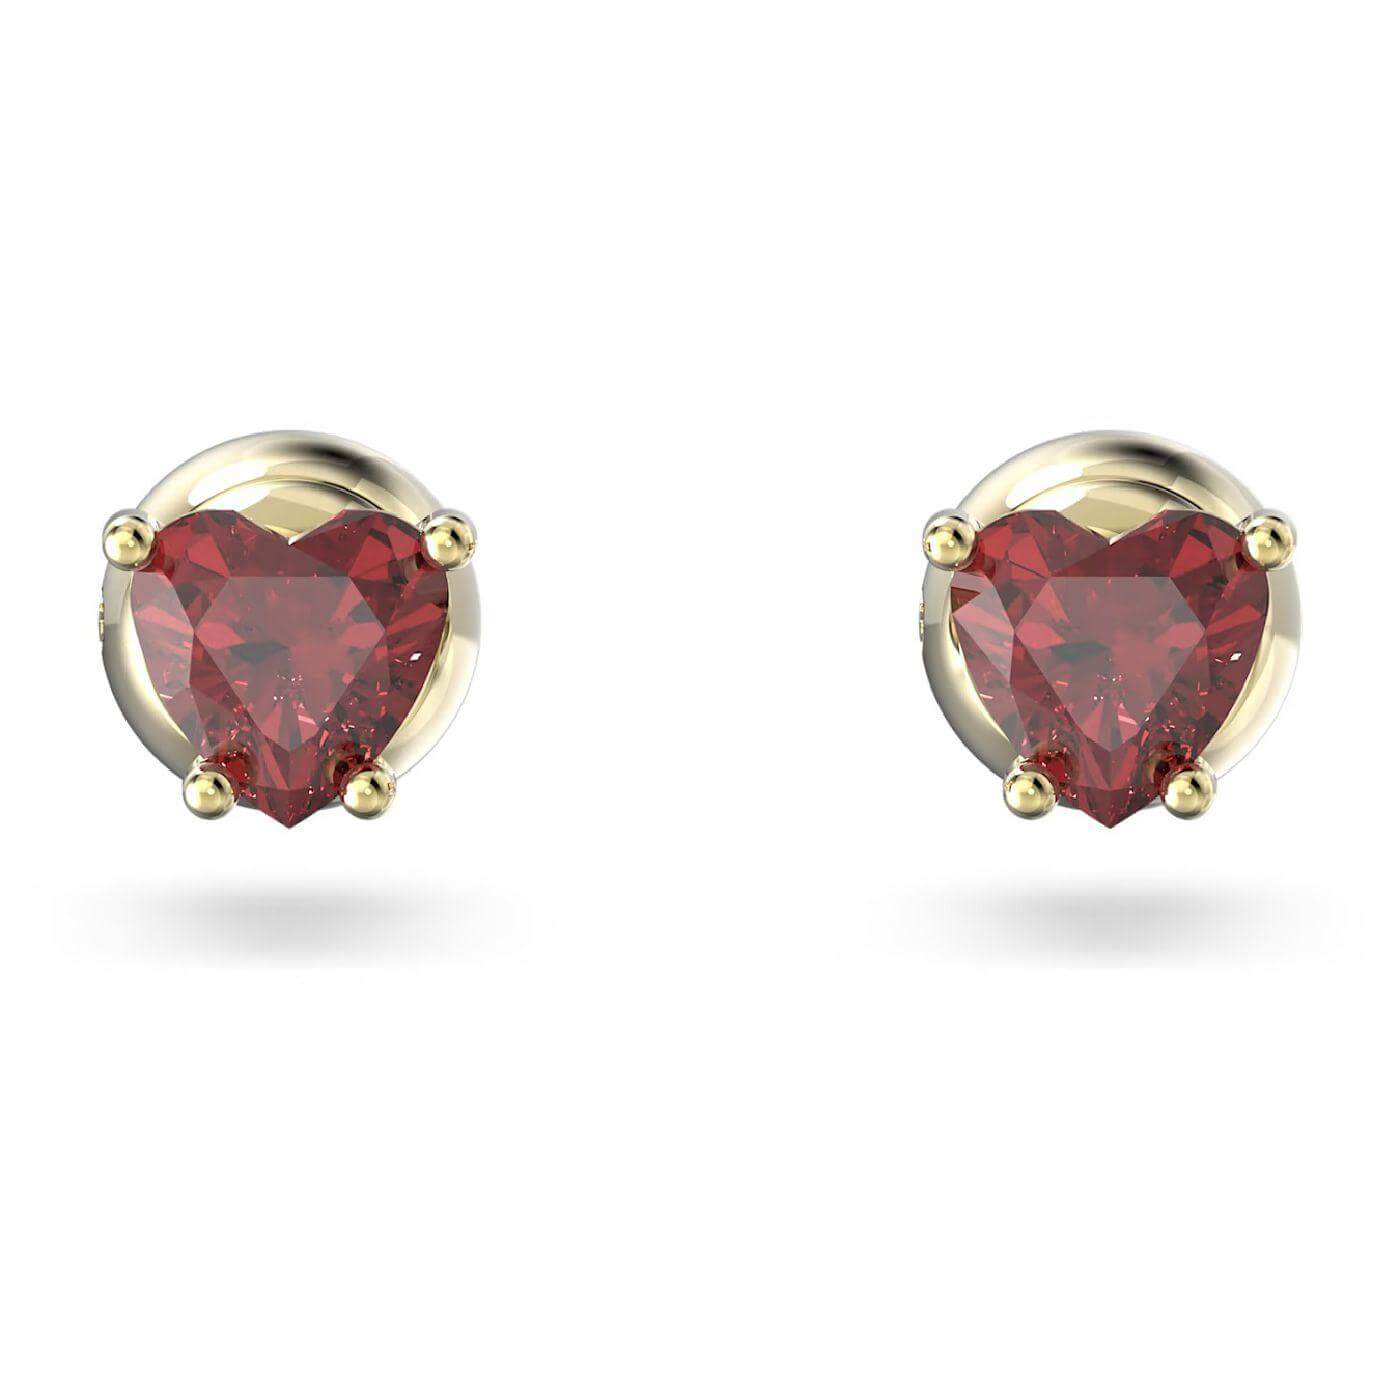 施华洛世 SWAROVSKI Stilla Stud Earrings Heart, Red, Gold-Tone Plated_免税价格_亿点免税